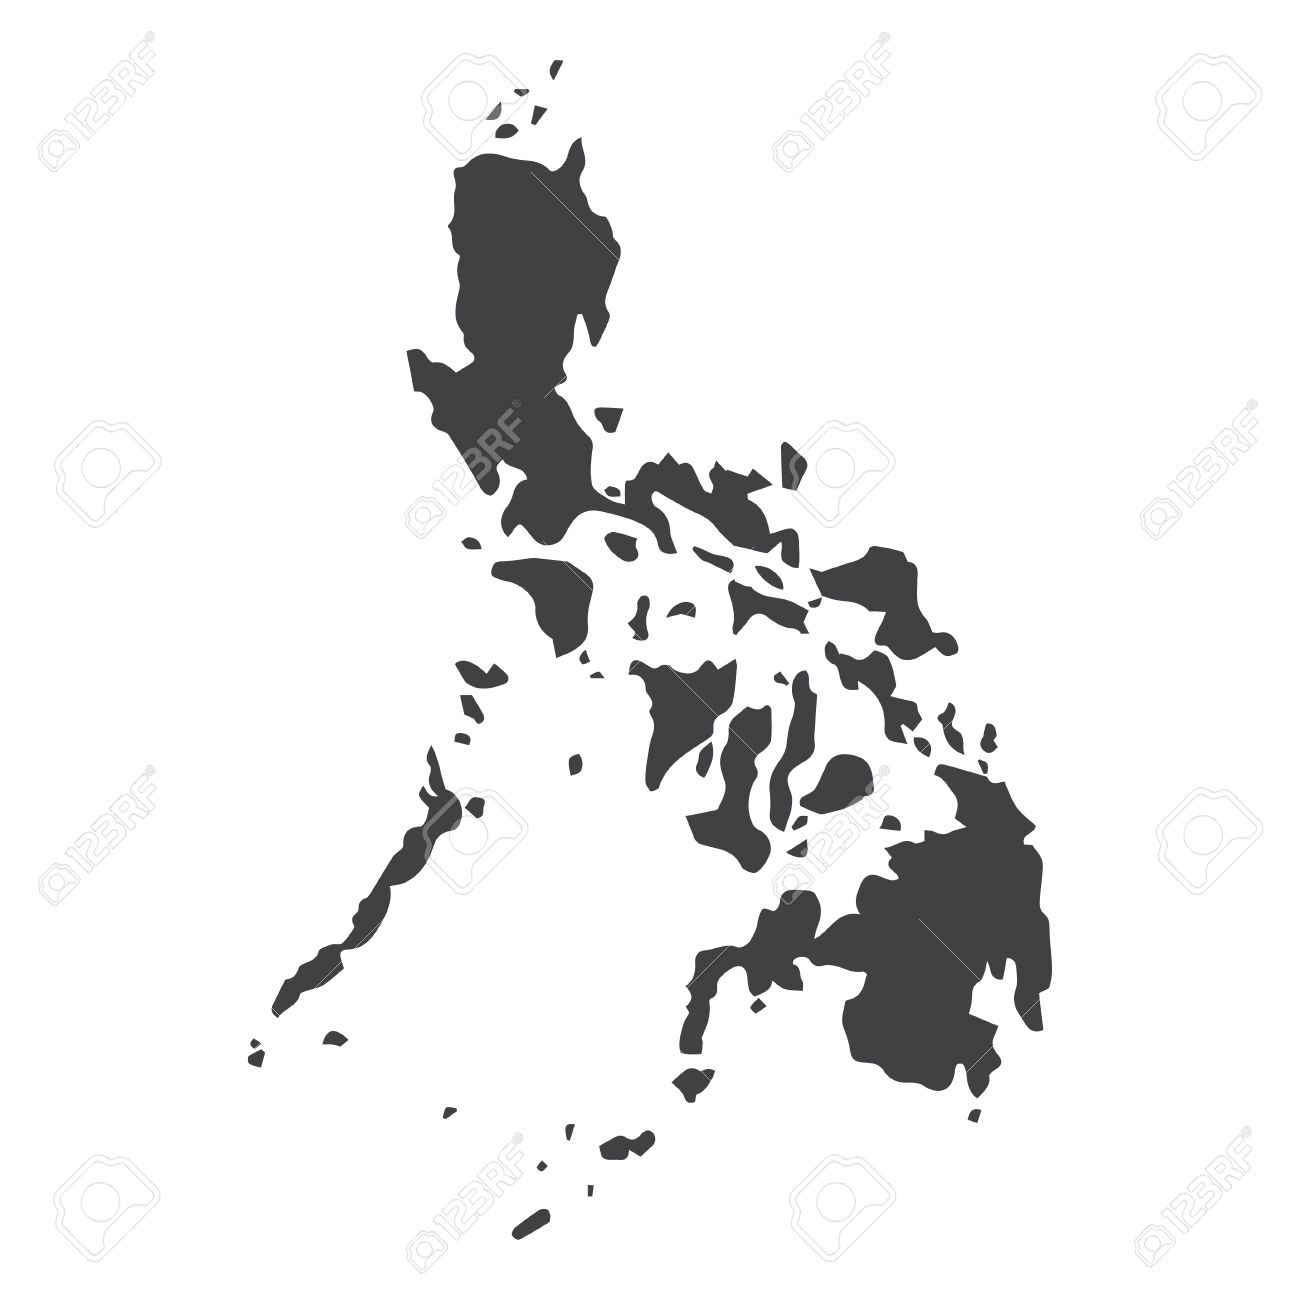 Philippines map black.